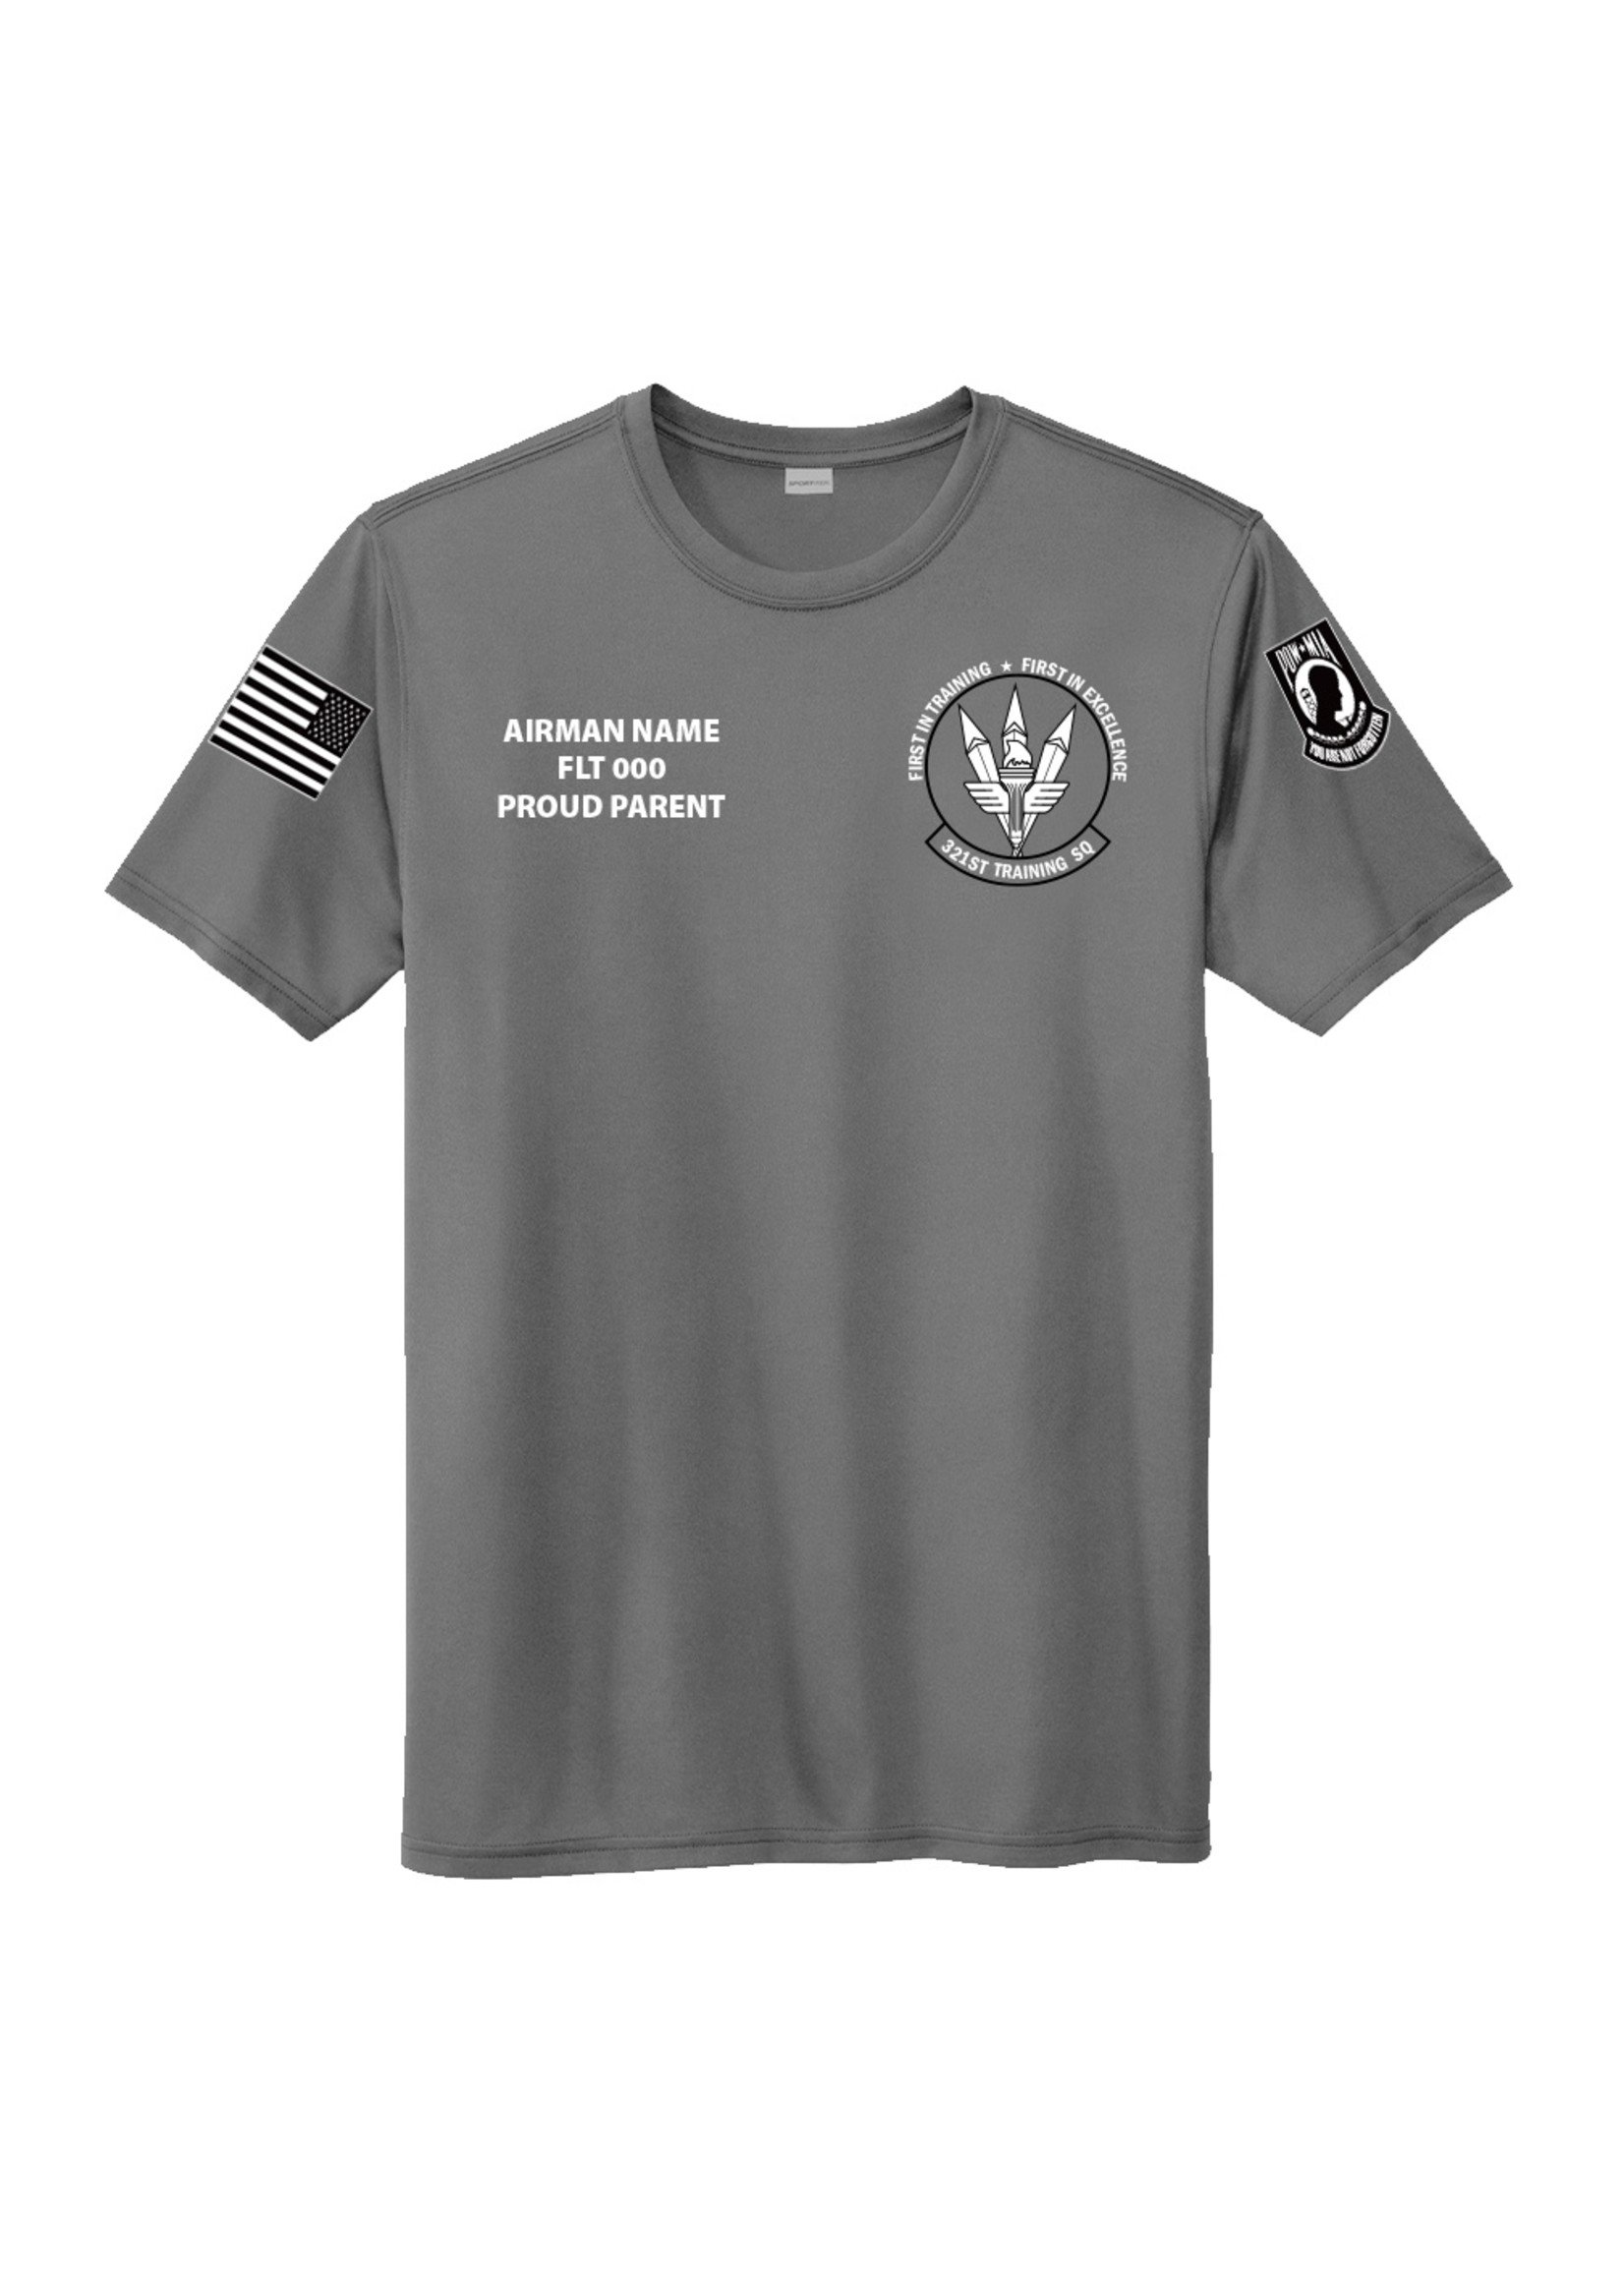 321st Warthogs Wicking Shirt - Lackland Shirt Shop